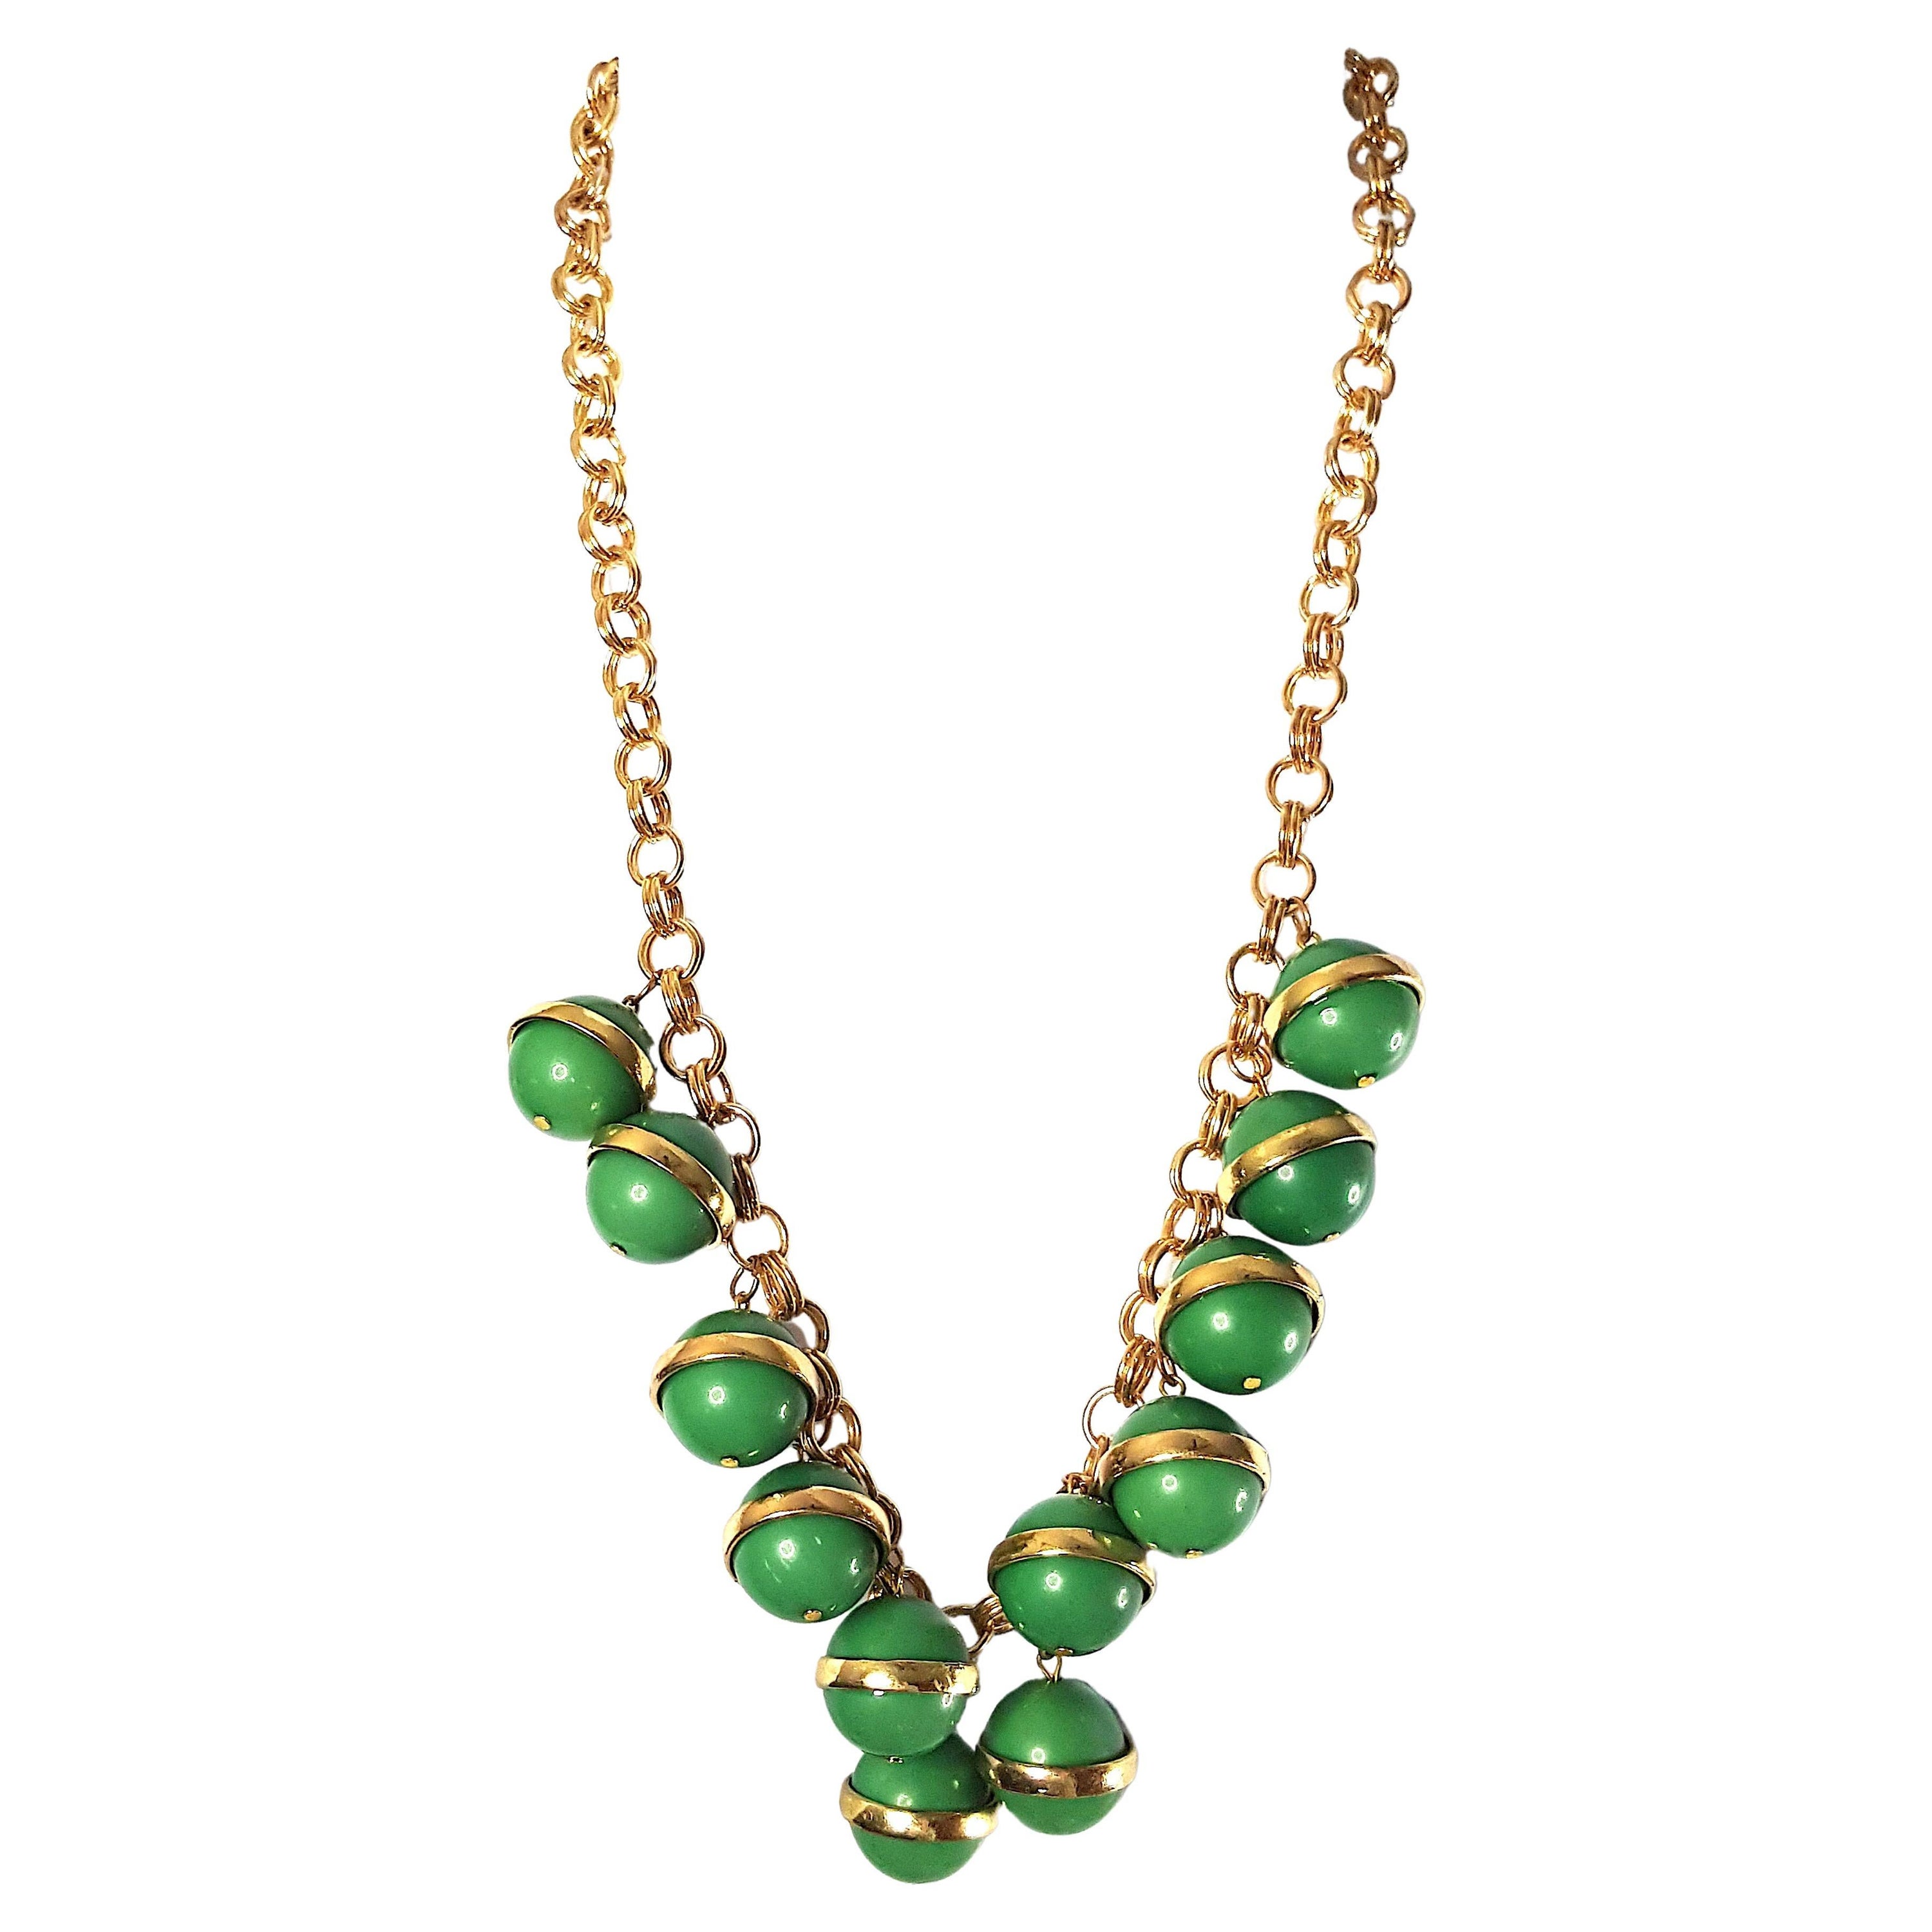 Bakelite 1930s German ArtDeco GoldRinged EmeraldBallPendants ChainLink Necklace For Sale